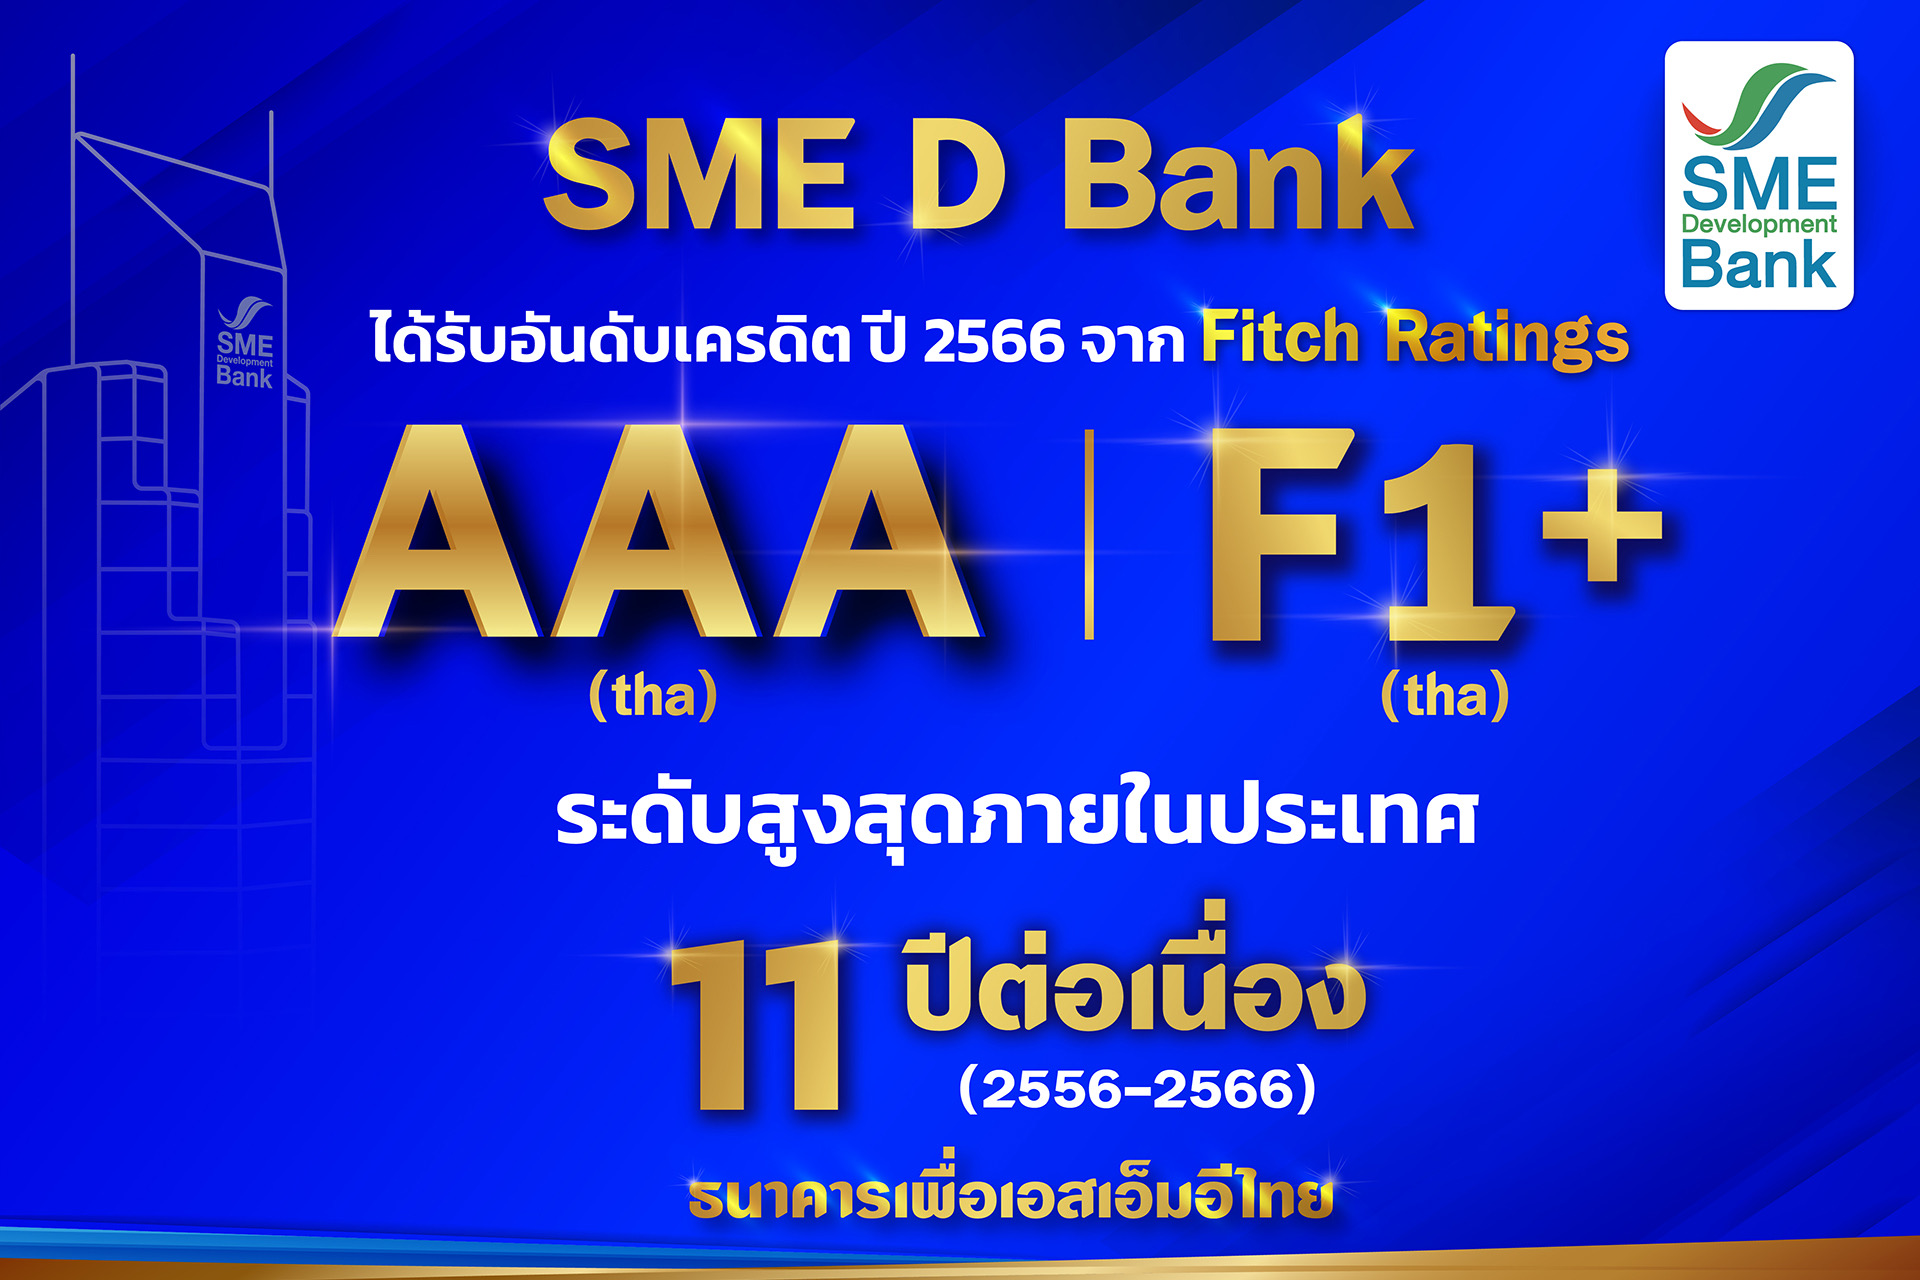 SME D Bank รับจัดอันดับ ‘ฟิทช์ เรทติ้งส์” ระดับ AAA(tha) สูงสุดในประเทศต่อเนื่อง 11 ปี